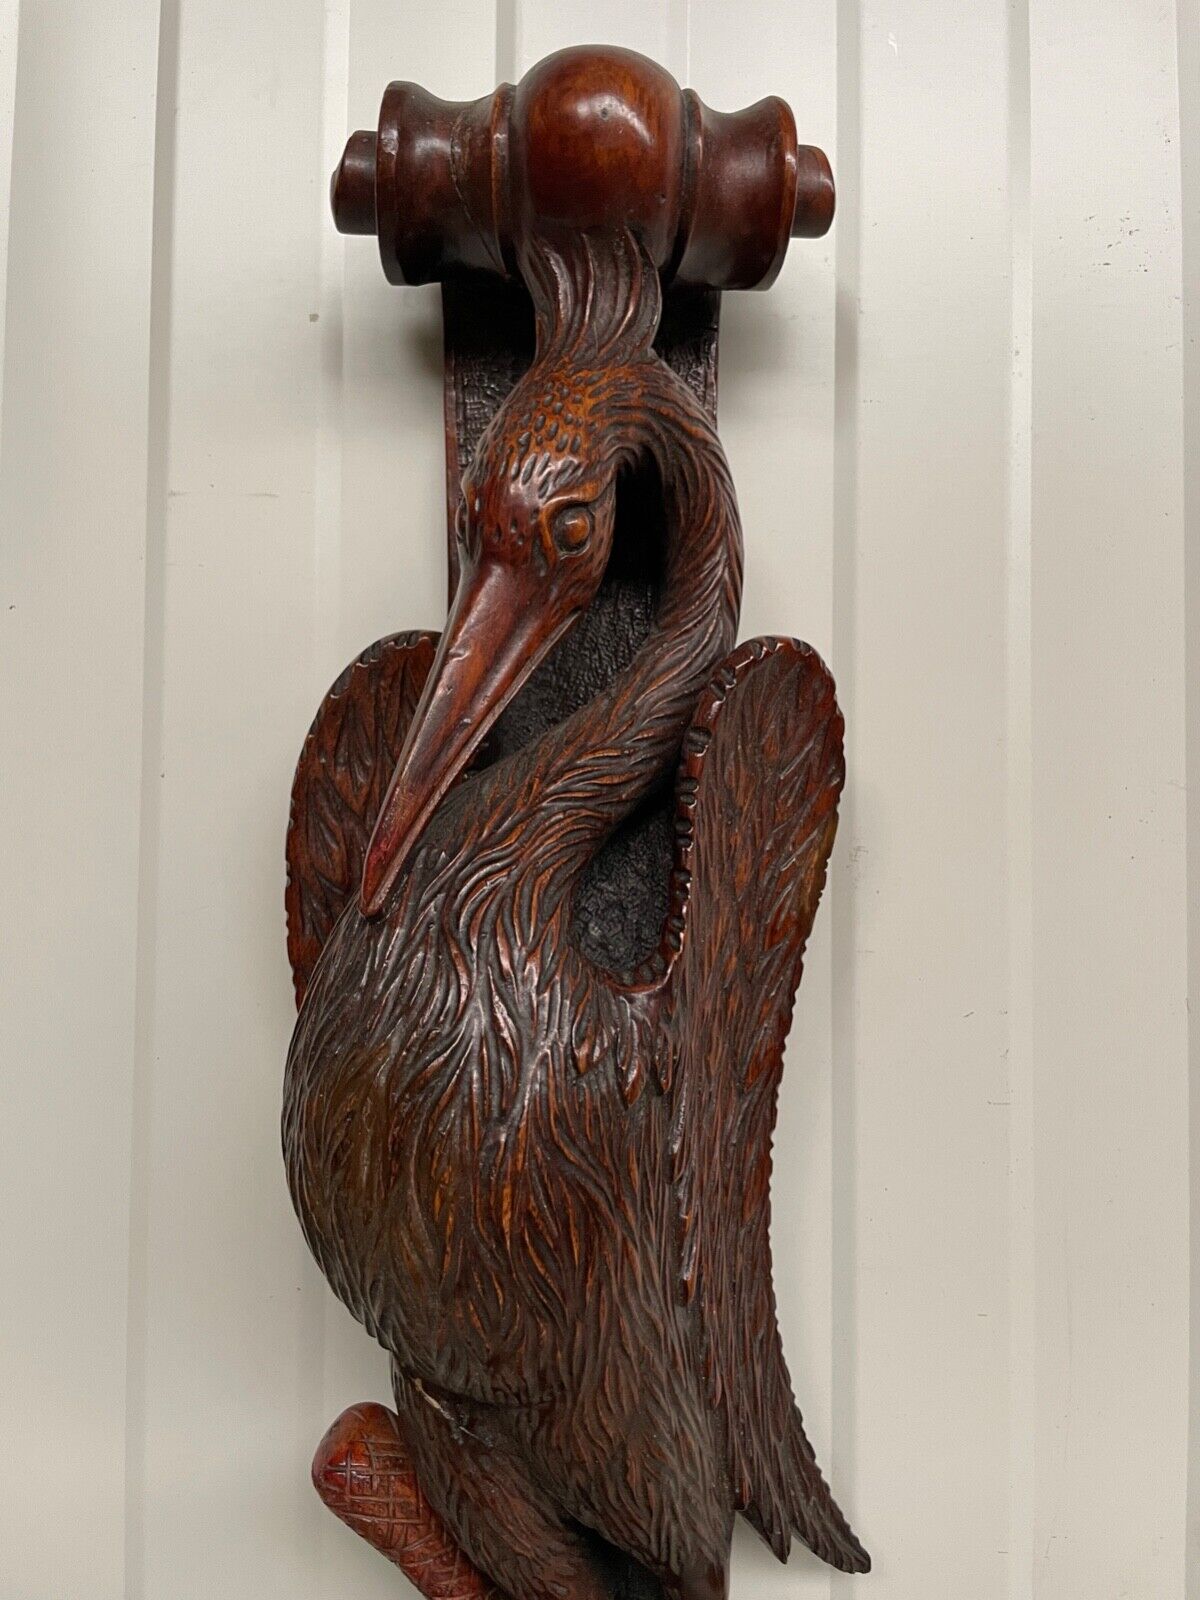 An Exceptional Sculpture in wood of a Pelican /Bird